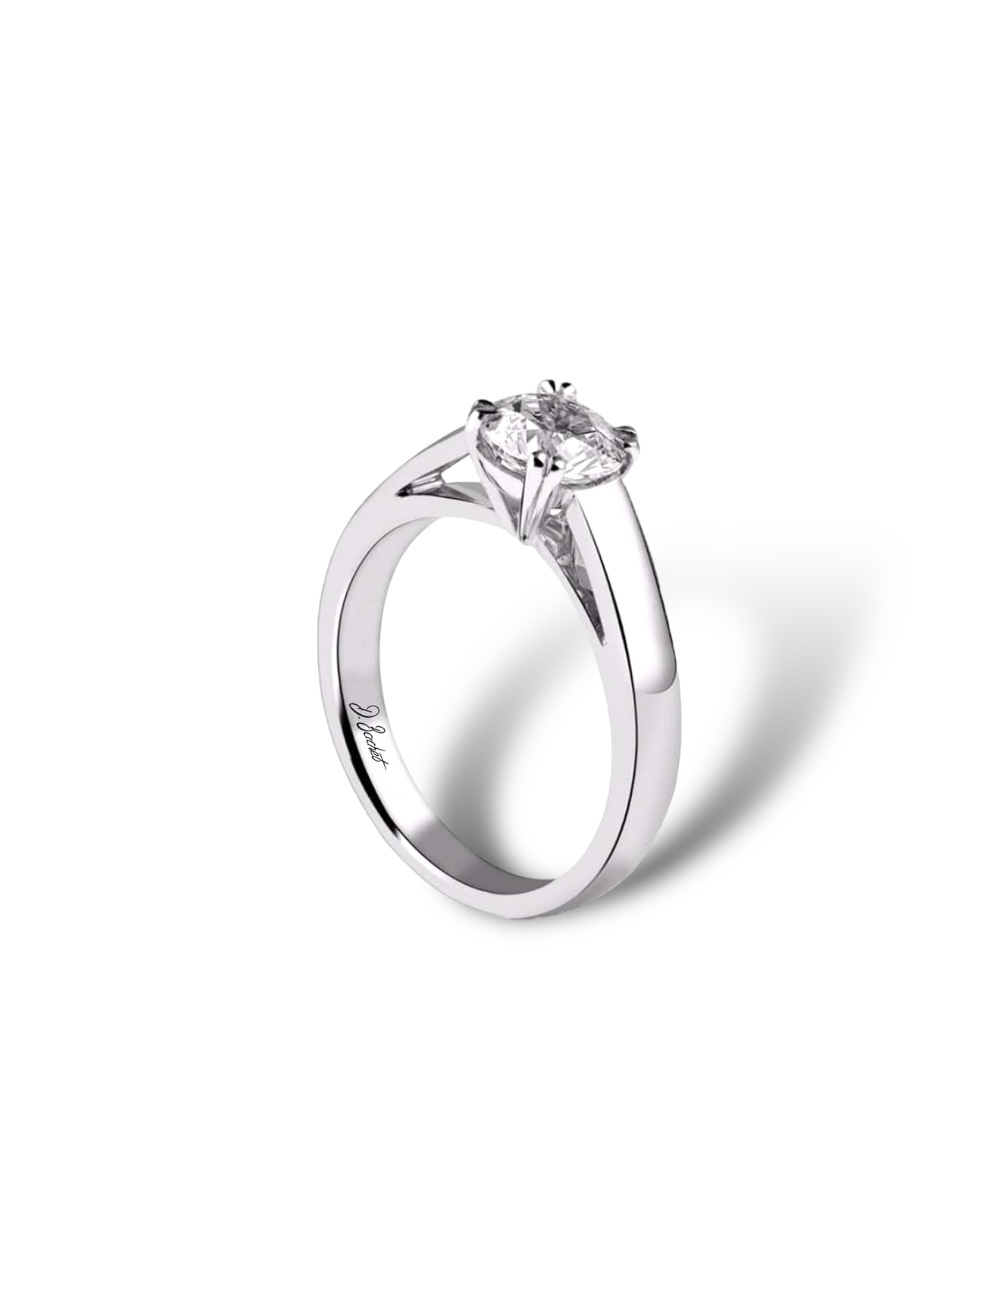 Modern platinum solitaire ring with 0.50 ct white diamond, sleek design for timeless elegance.